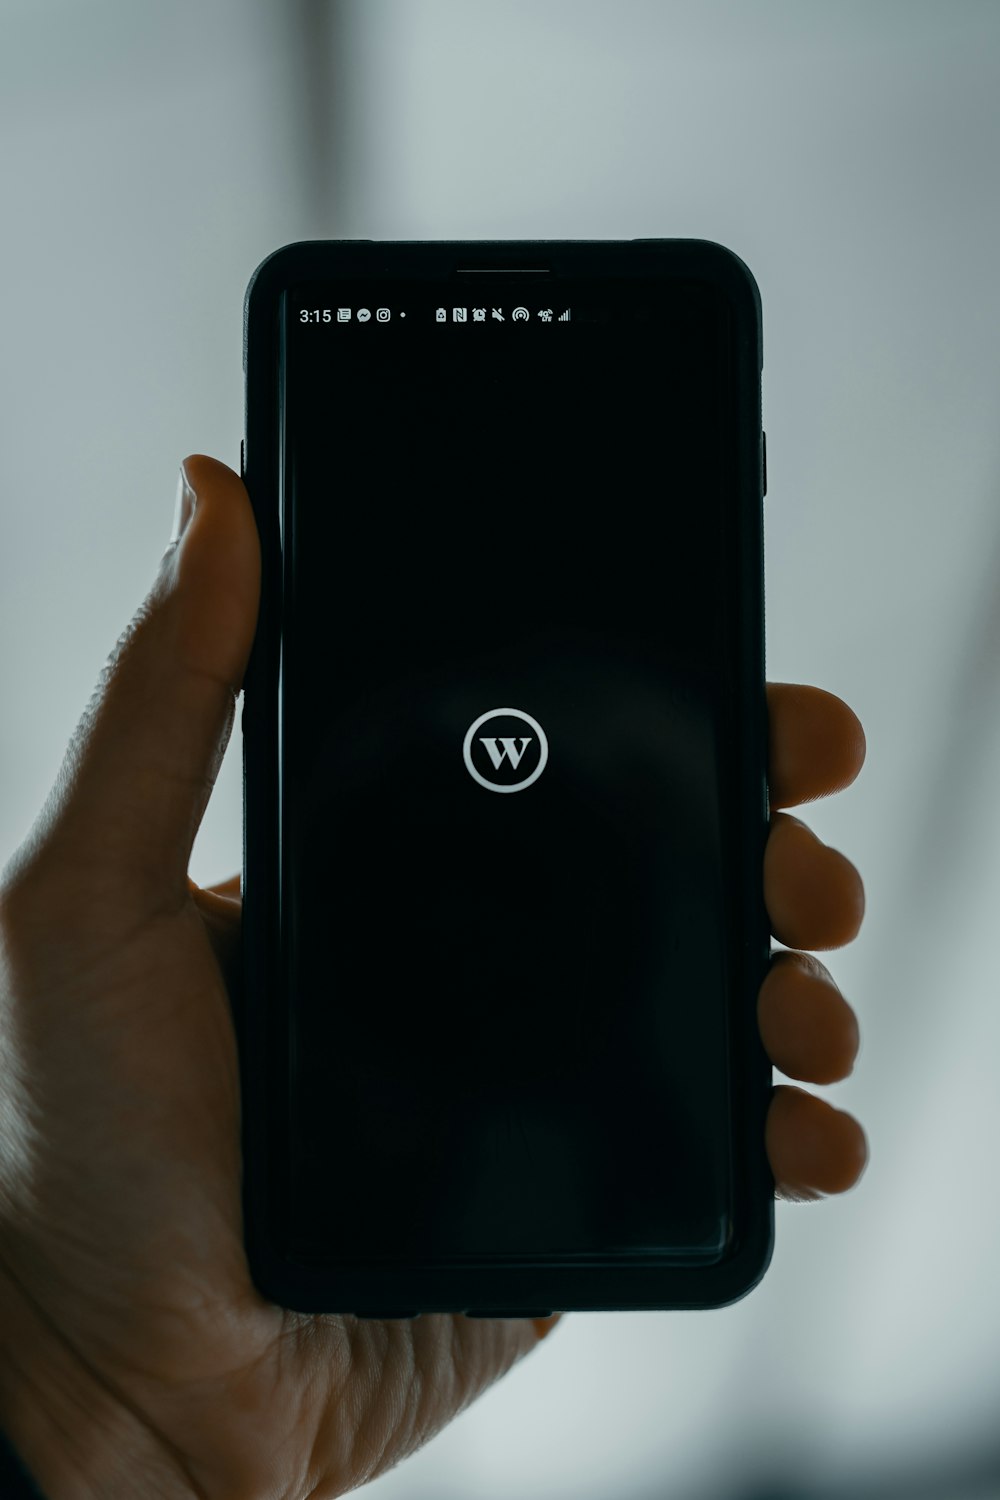 Teléfono inteligente LG Android negro encendido Mostrando 9